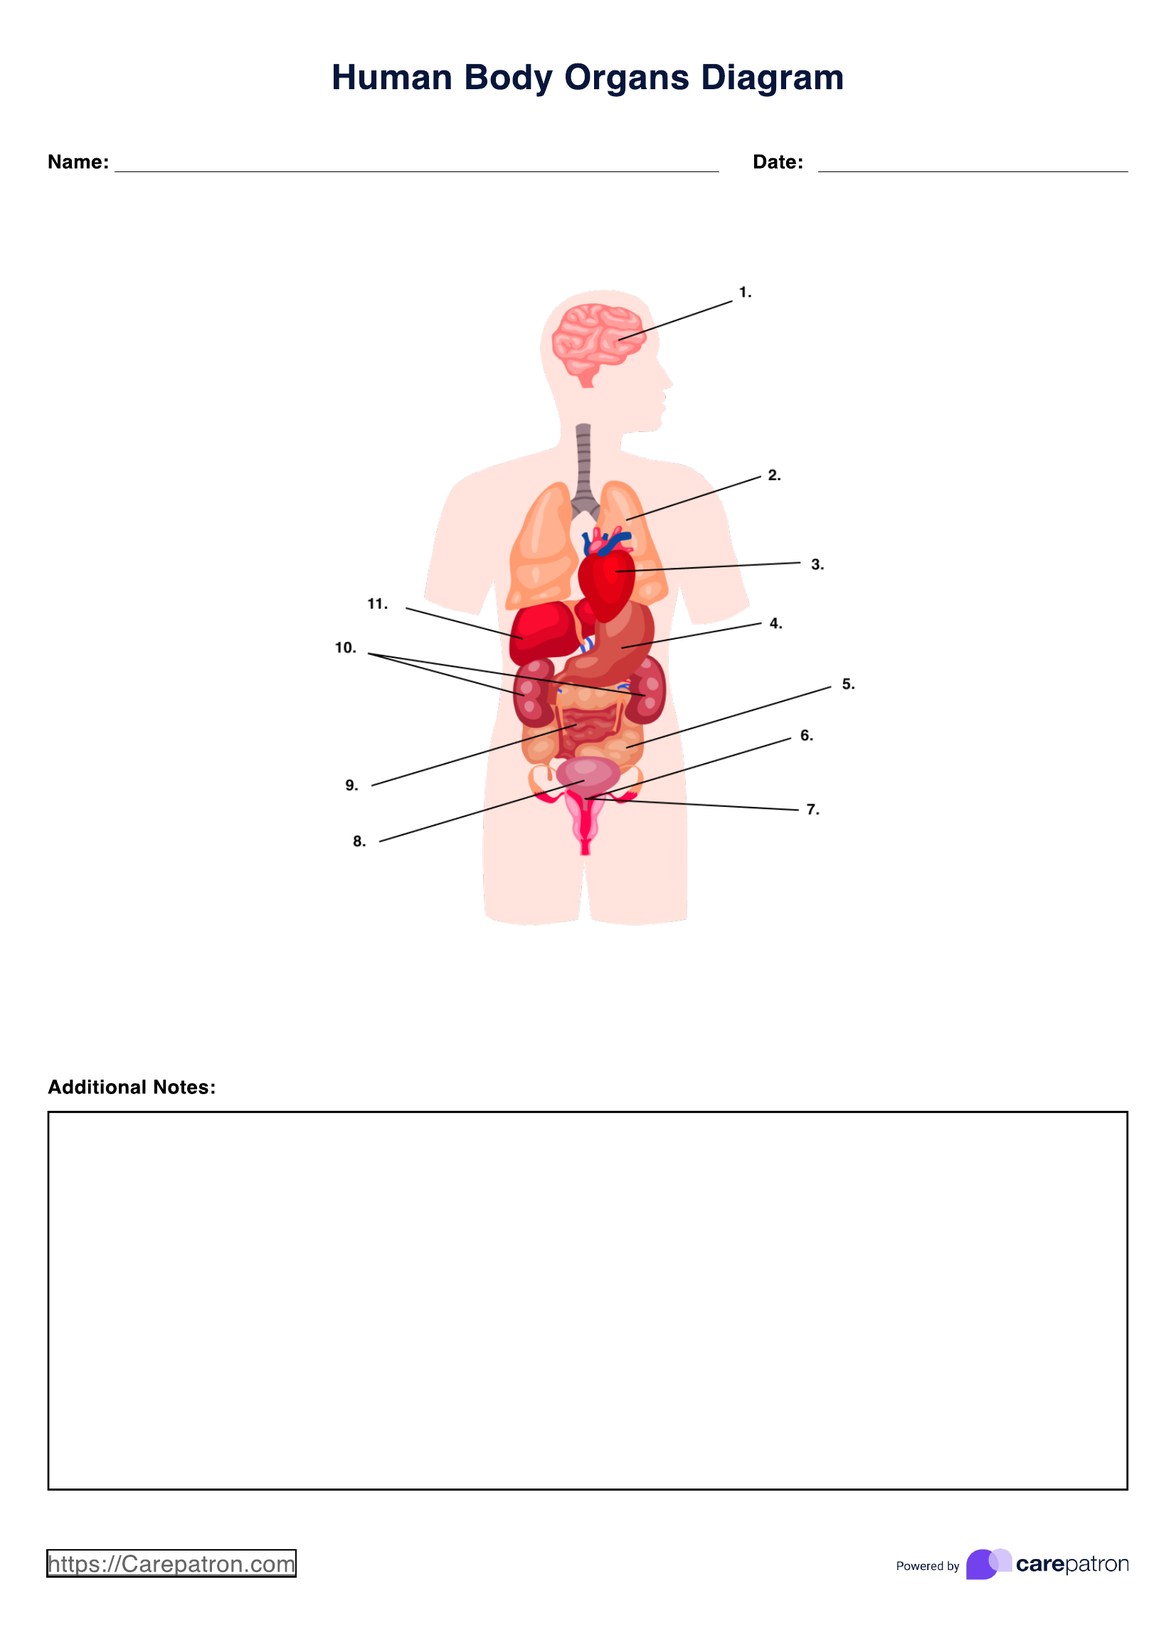 Human Body Organs Diagram PDF Example